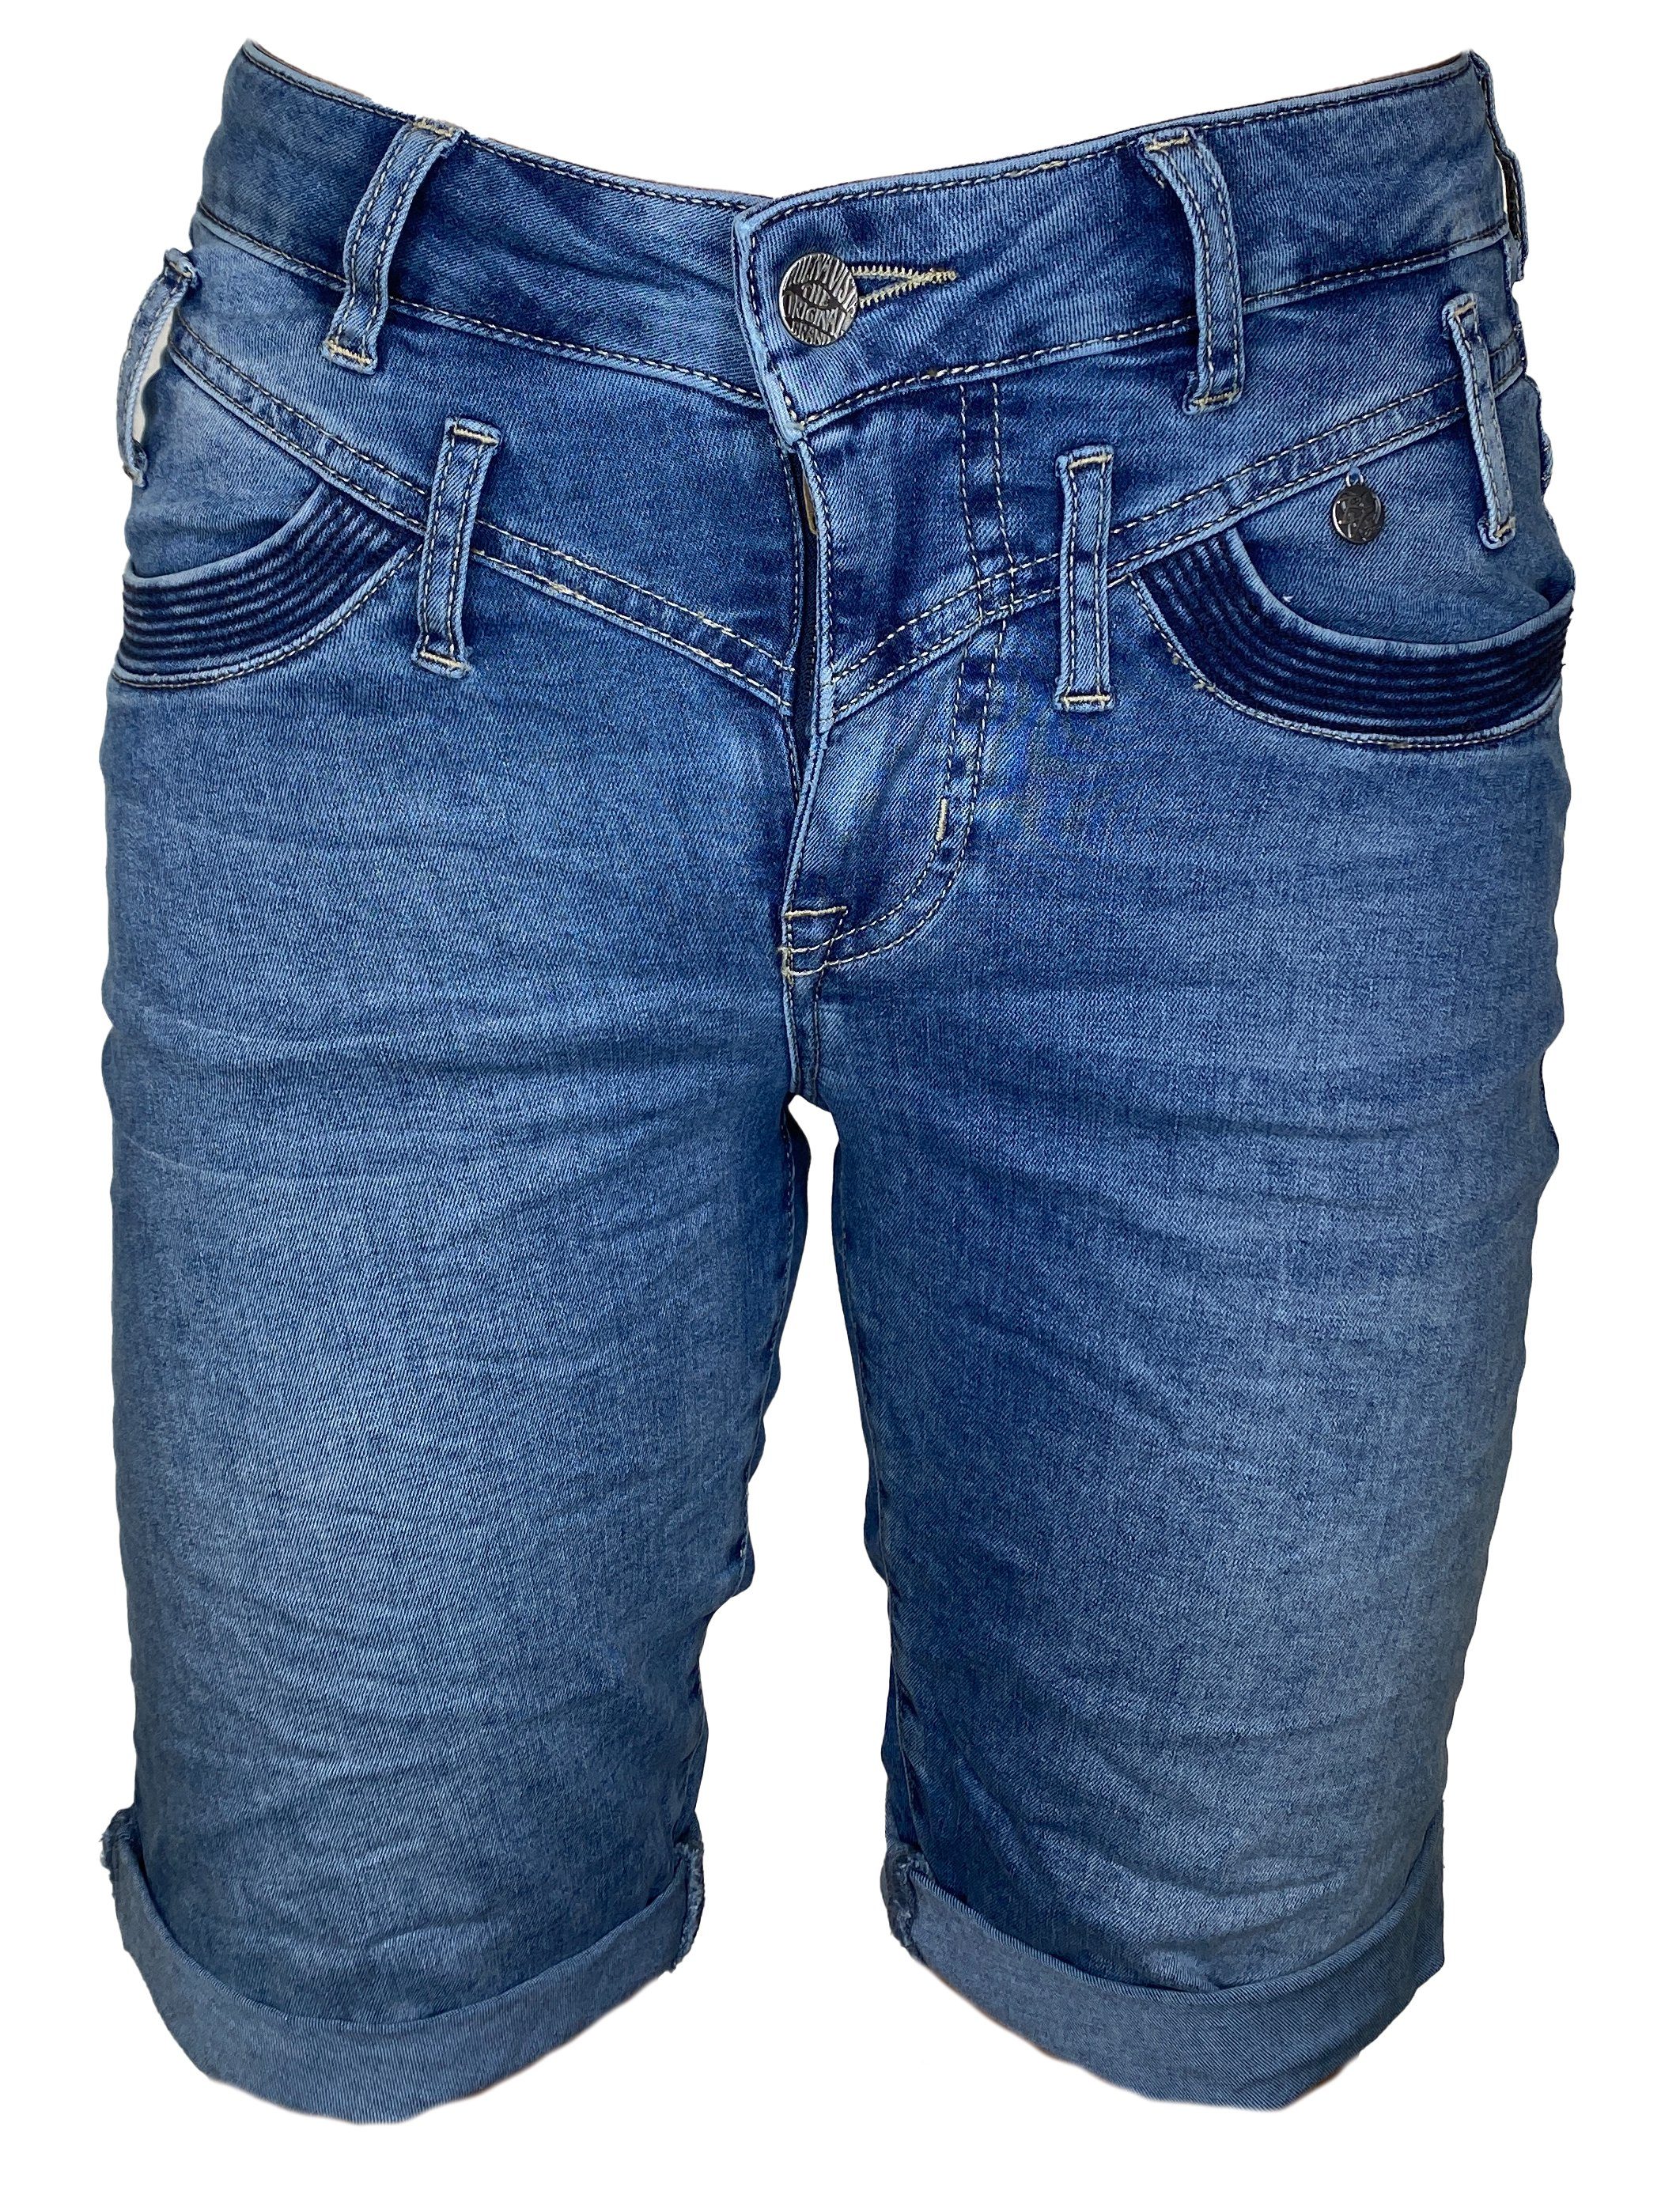 verlassen Scarp regulieren buena vista jeans kurz Nylon Anzahlung Katalog